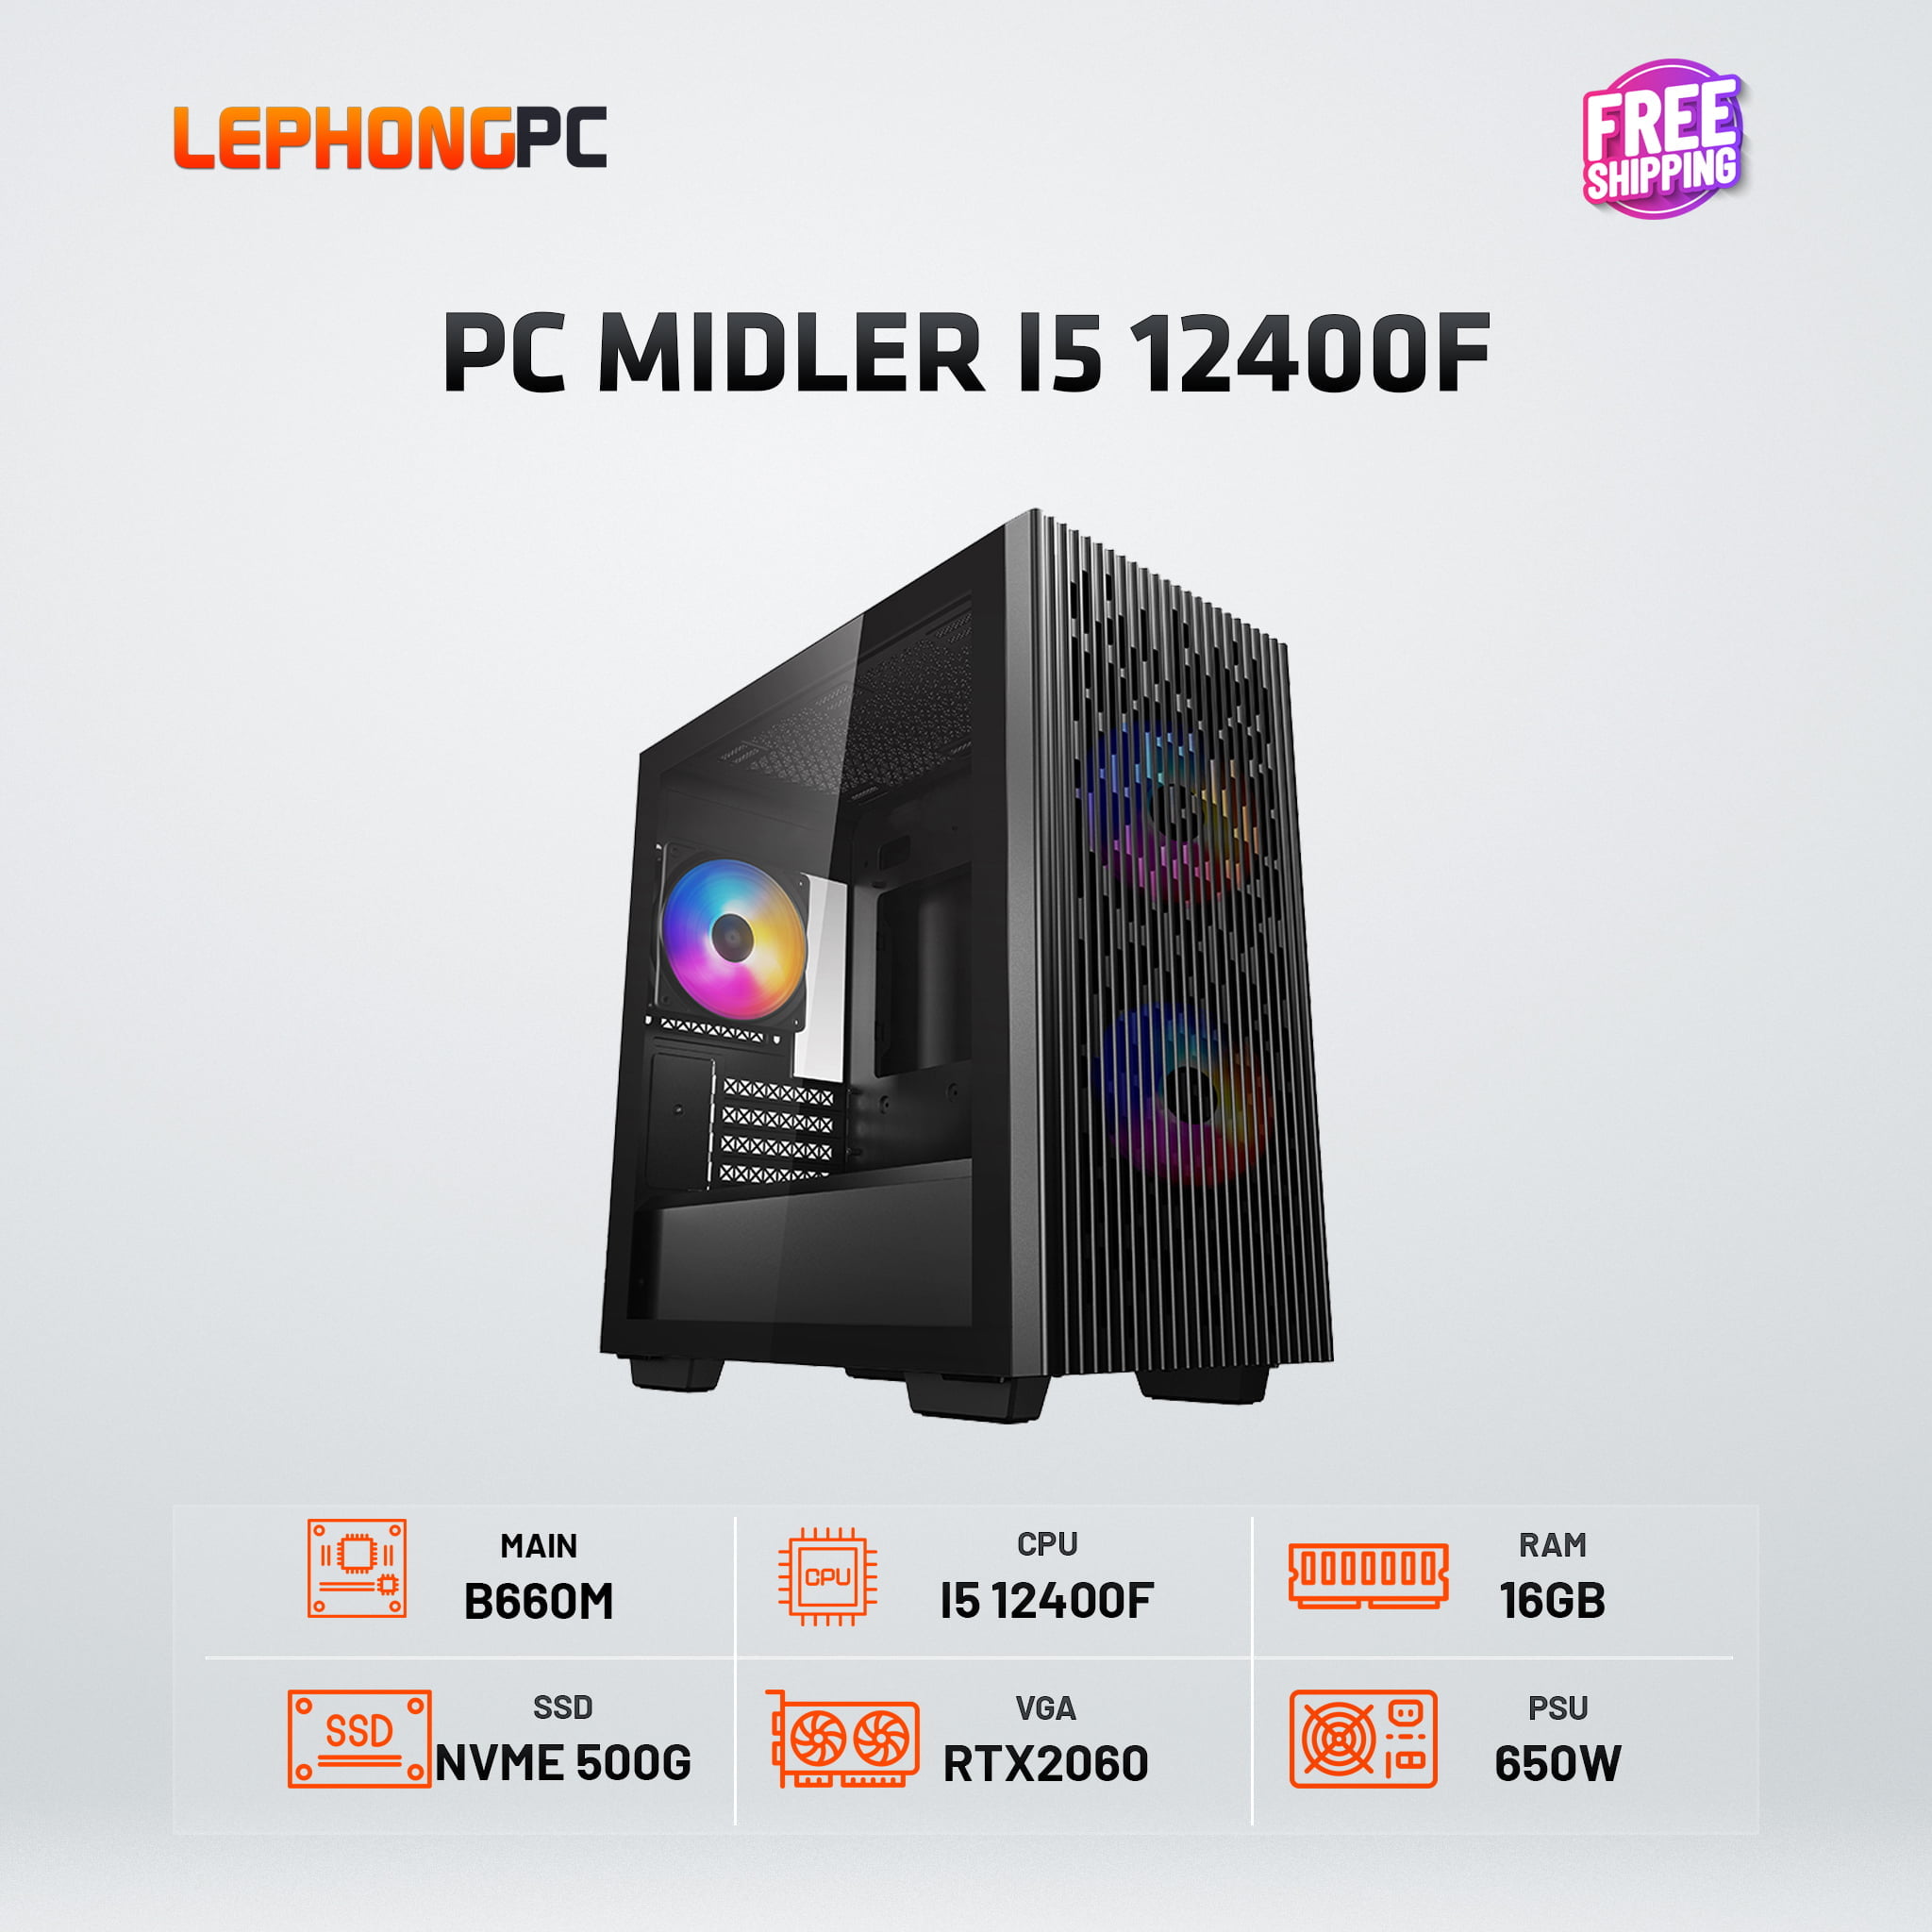 PC MIDLER I5 12400F